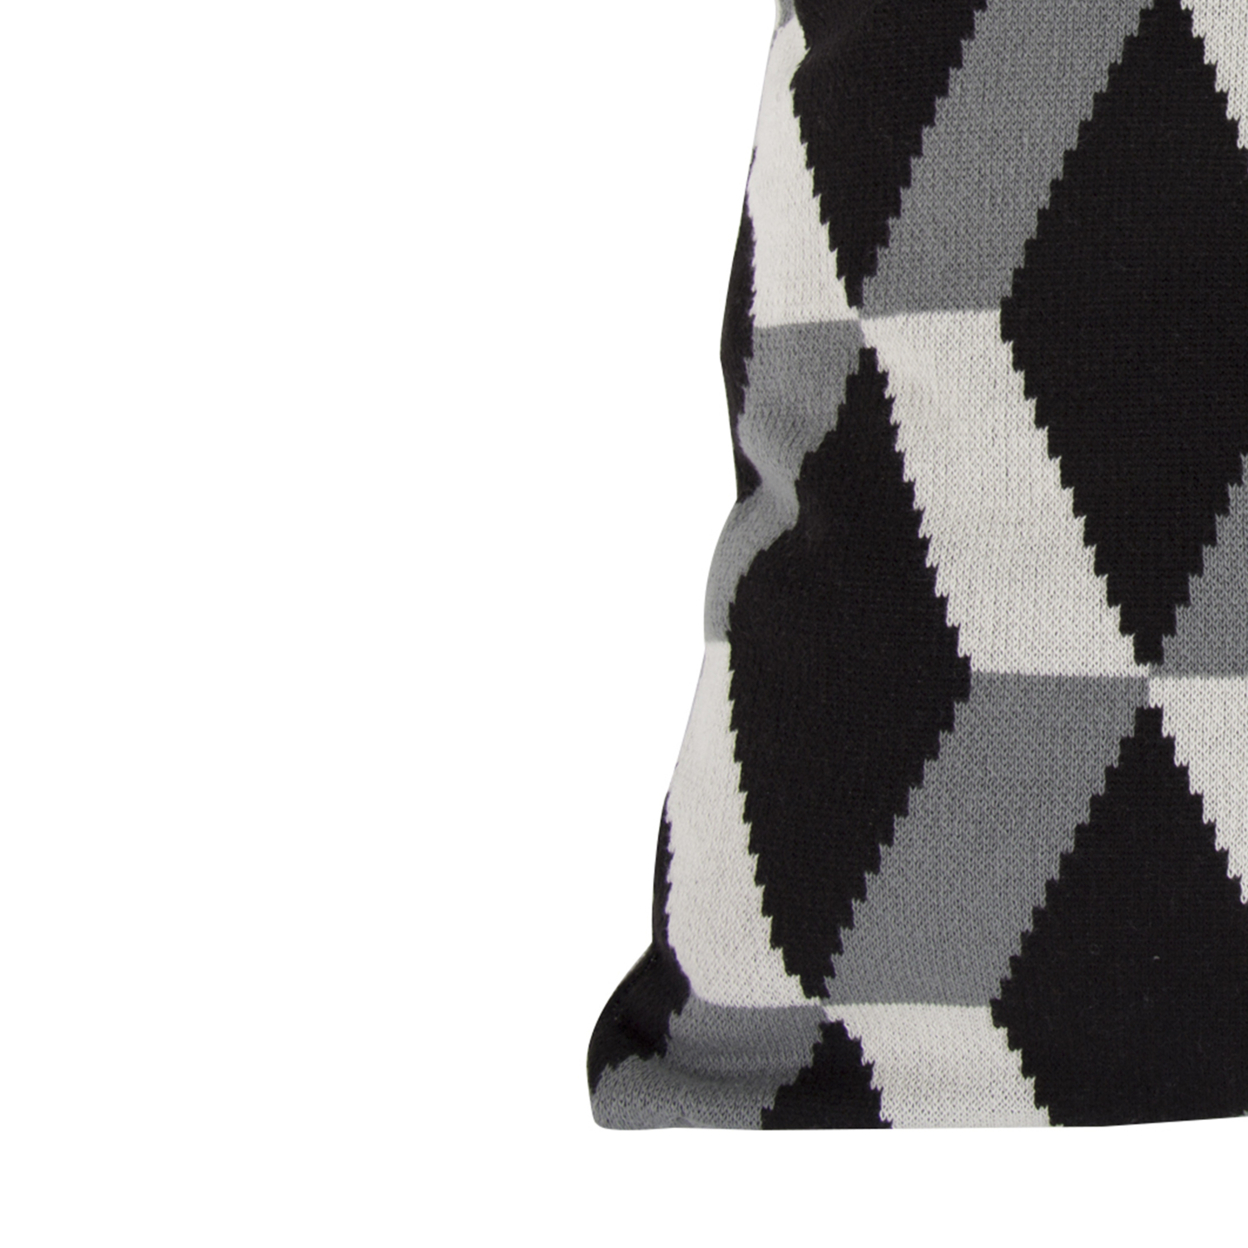 20 X 20 Inch Cashmere Pillow With Zig Zag Pattern, Set Of 2, Black And Gray- Saltoro Sherpi